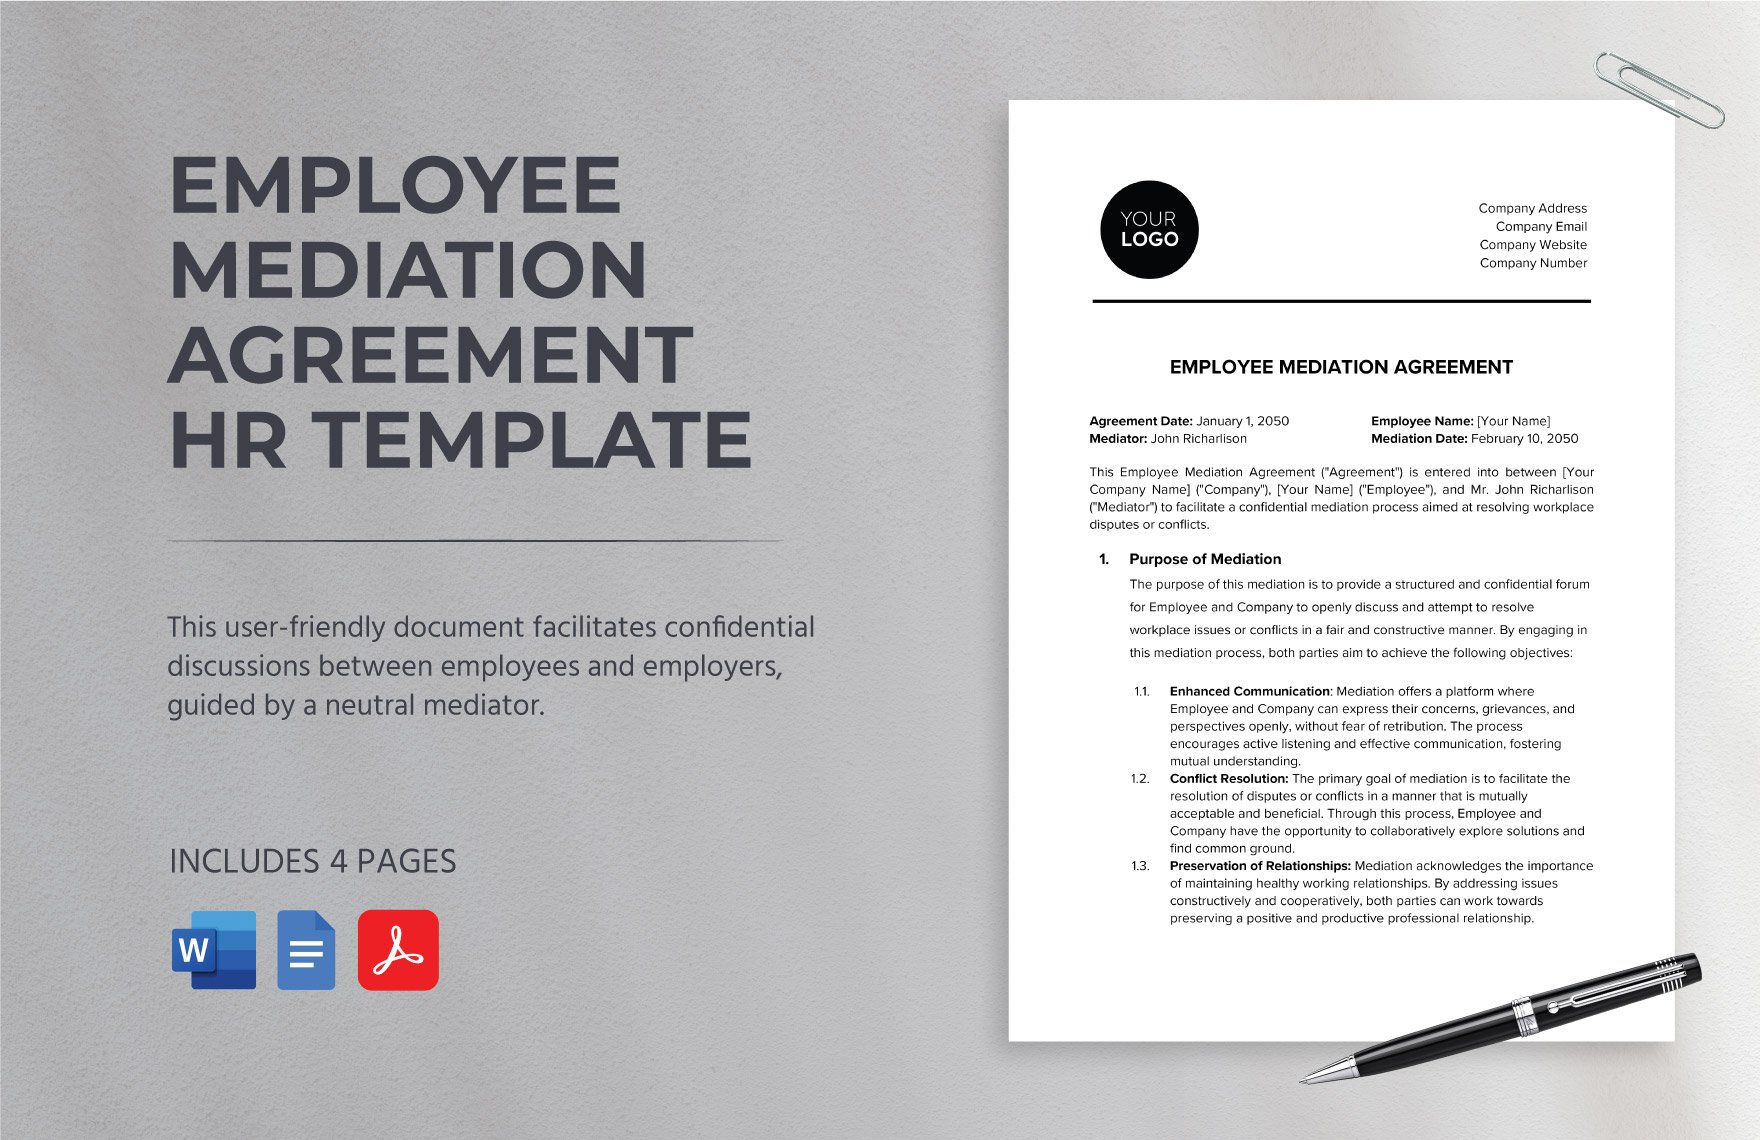 Employee Mediation Agreement HR Template